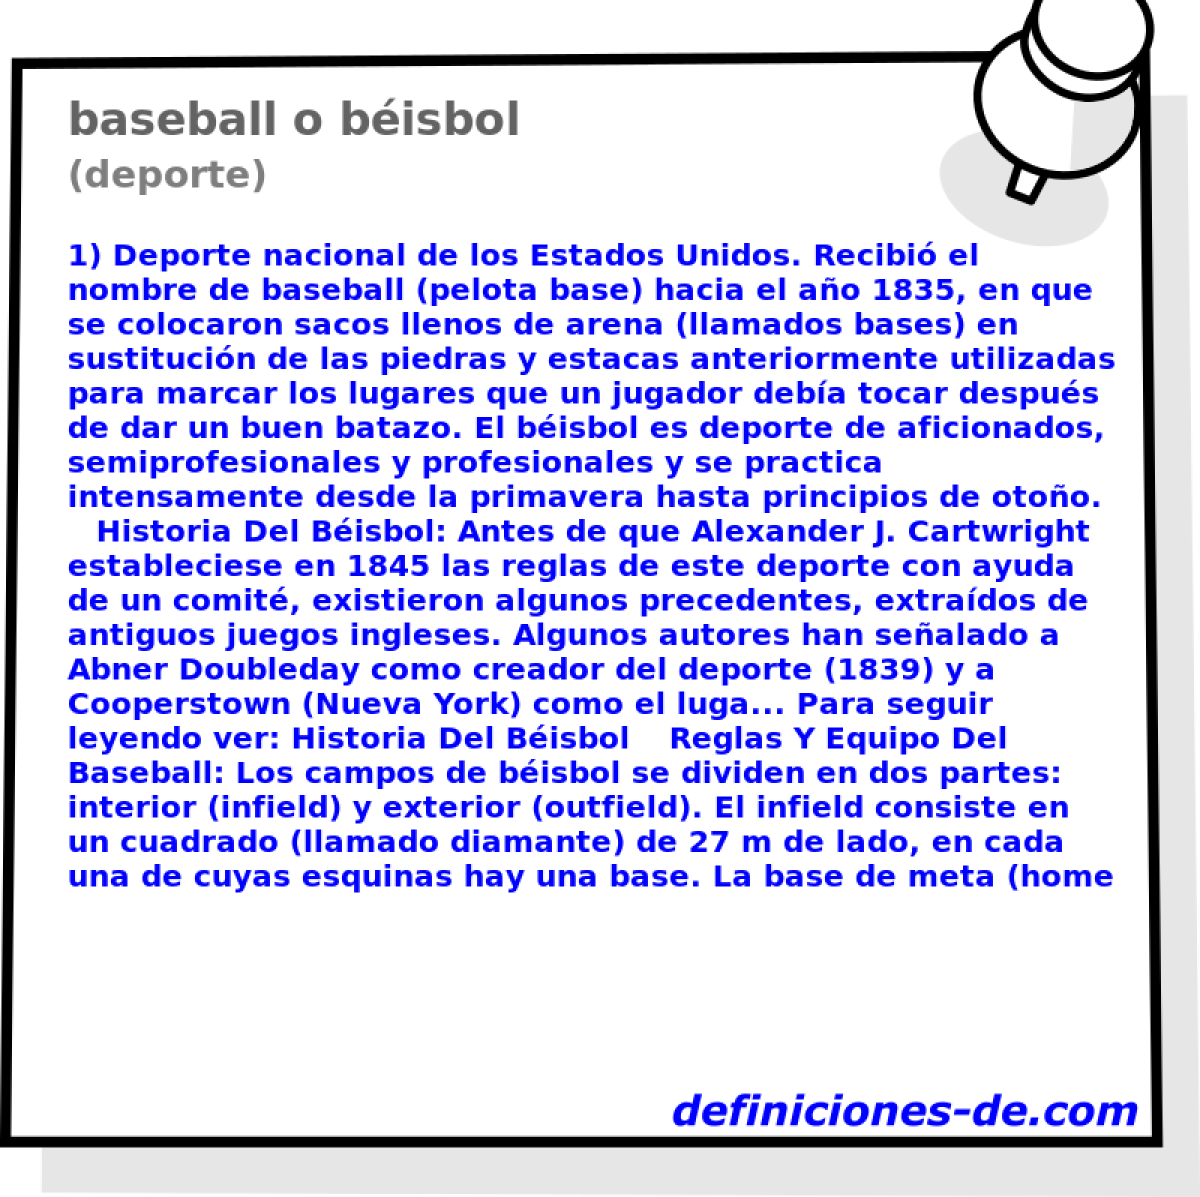 baseball o bisbol (deporte)